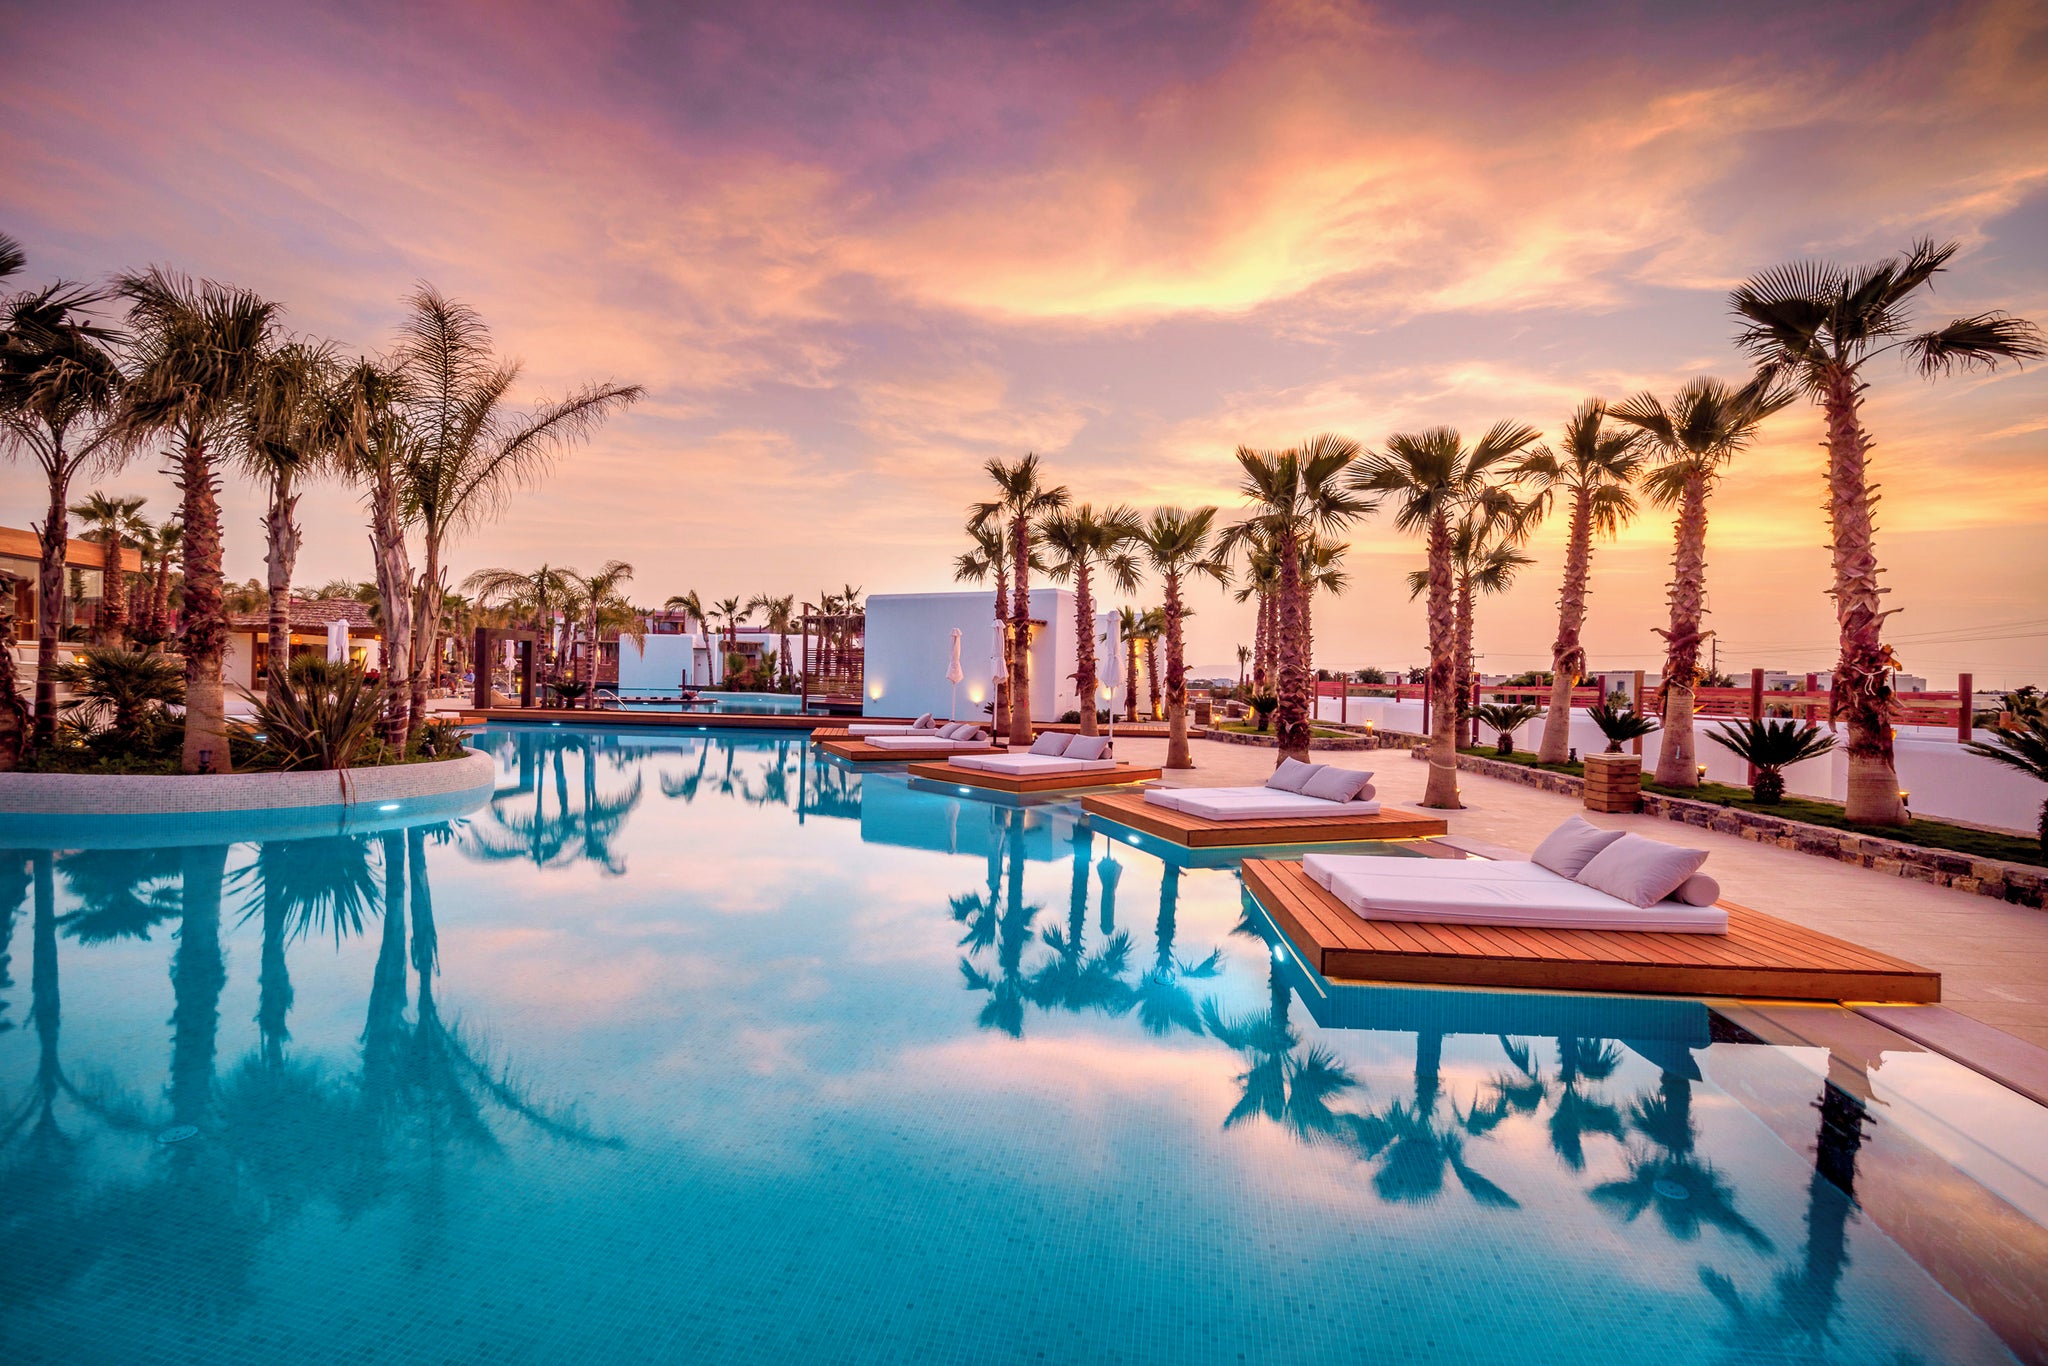 With lagoon pools nestled amid palms, Stella Island Luxury Resort & Spa makes the perfect retreat